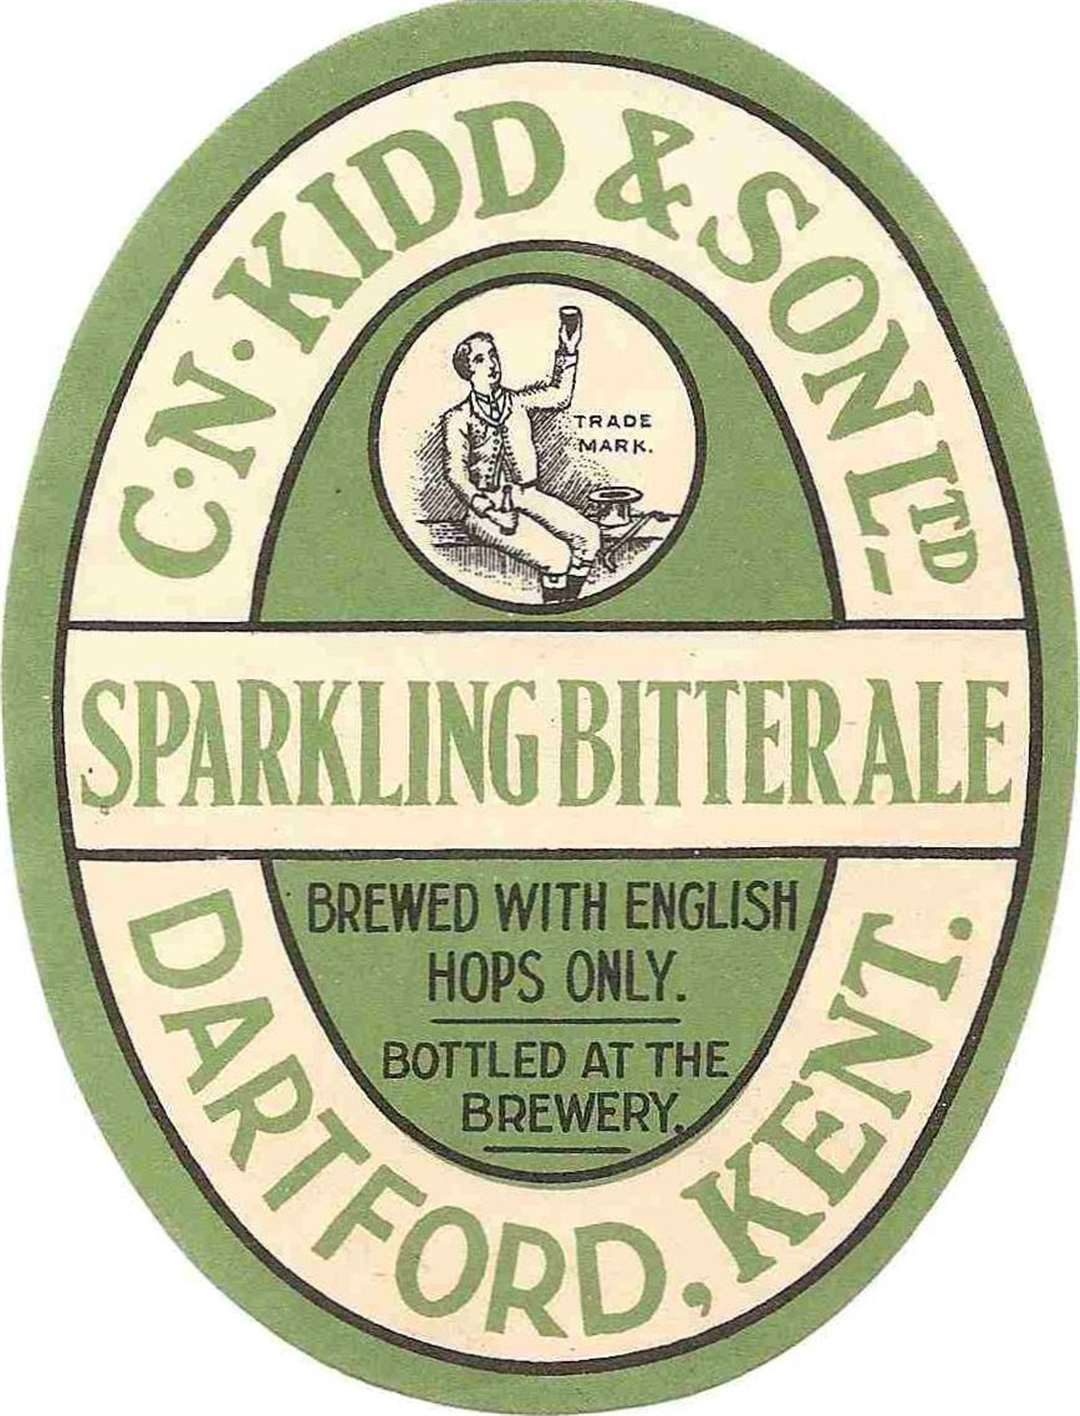 An intriguing concept - Kidd's sparkling bitter ale